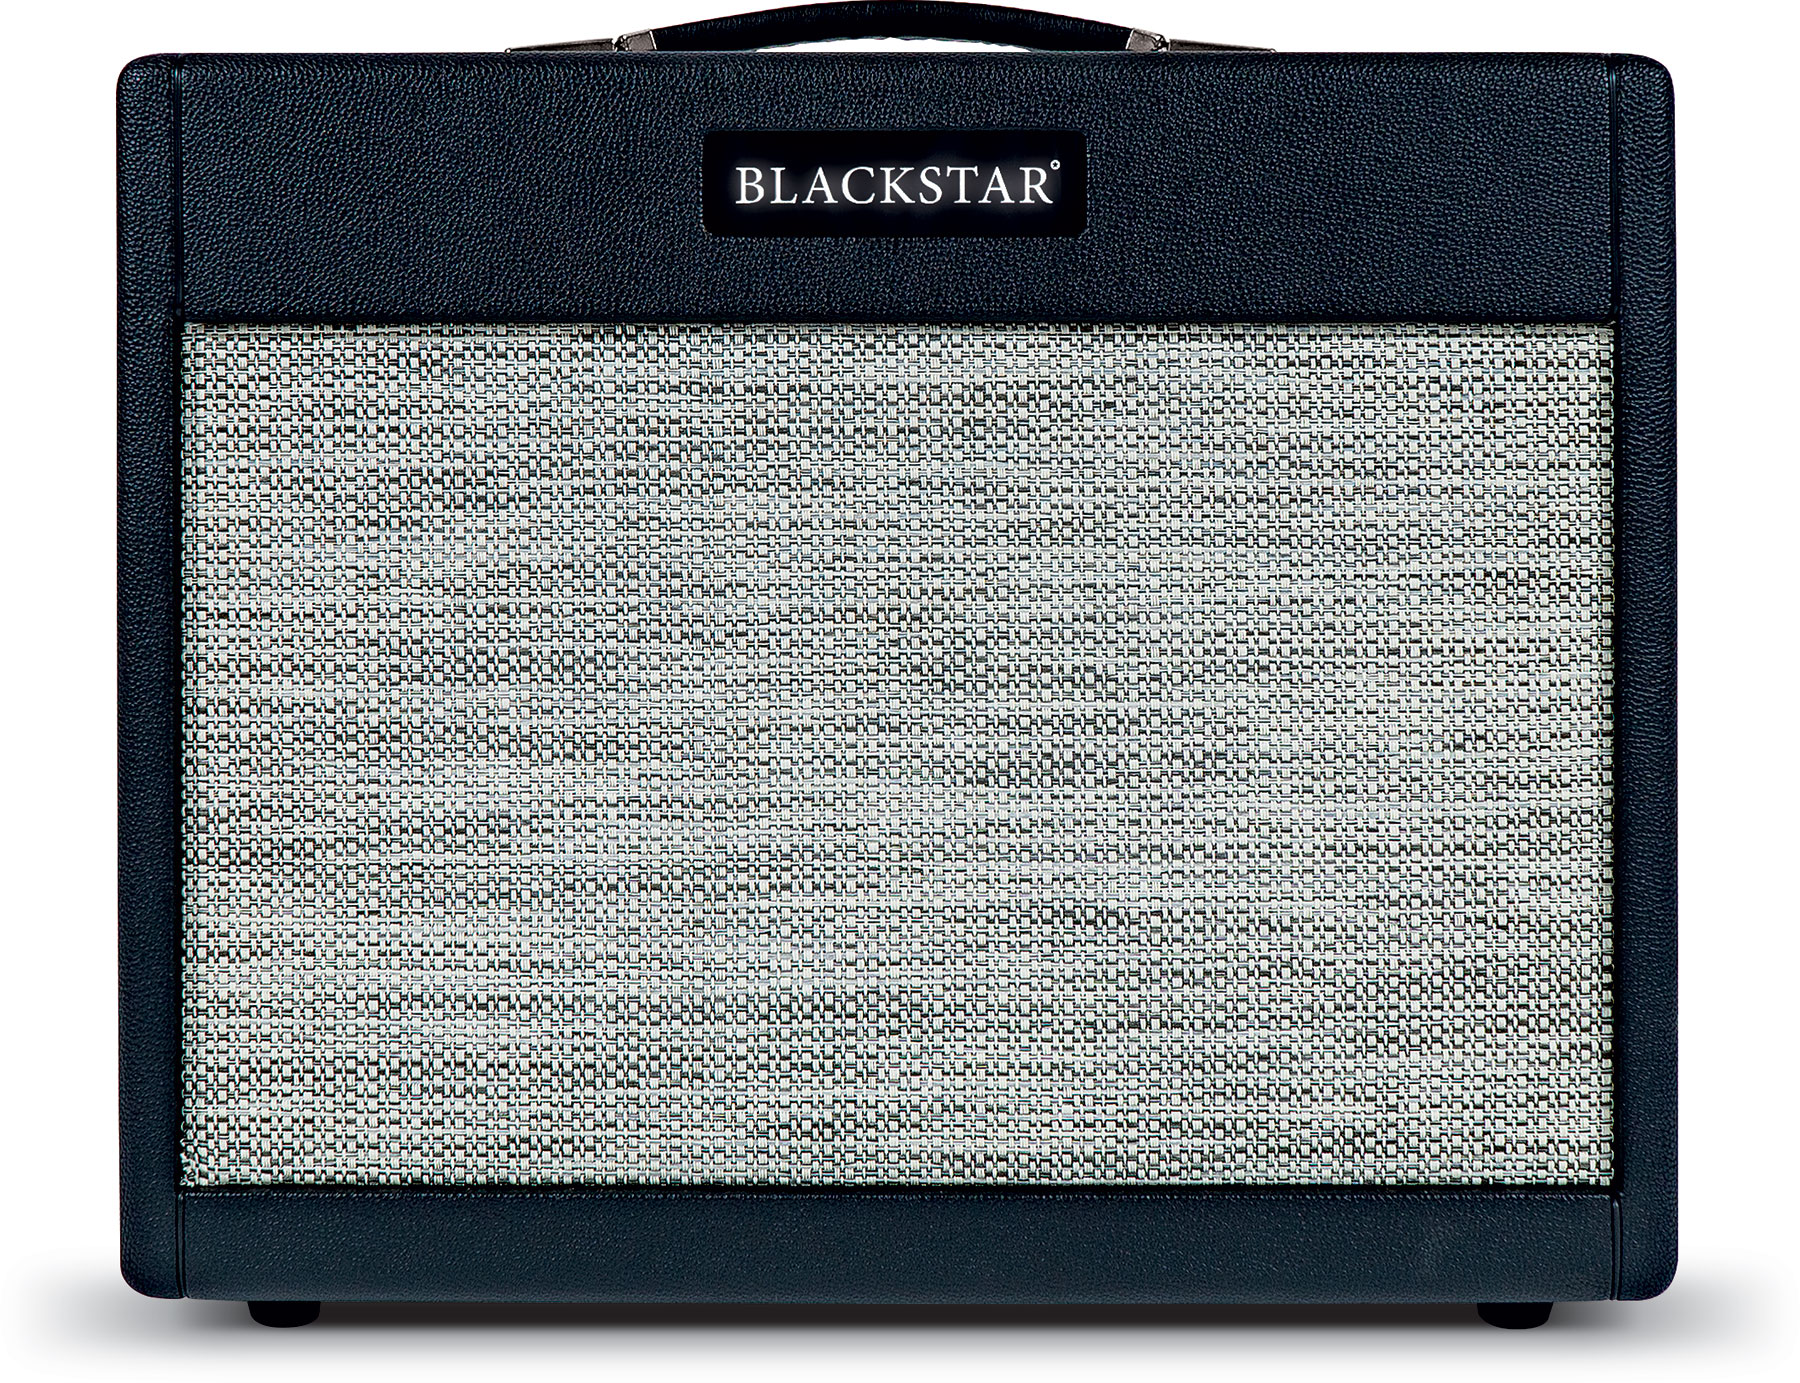 Blackstar St. James 6l6 50/5/2w 1x12 Black - Combo amplificador para guitarra eléctrica - Variation 1